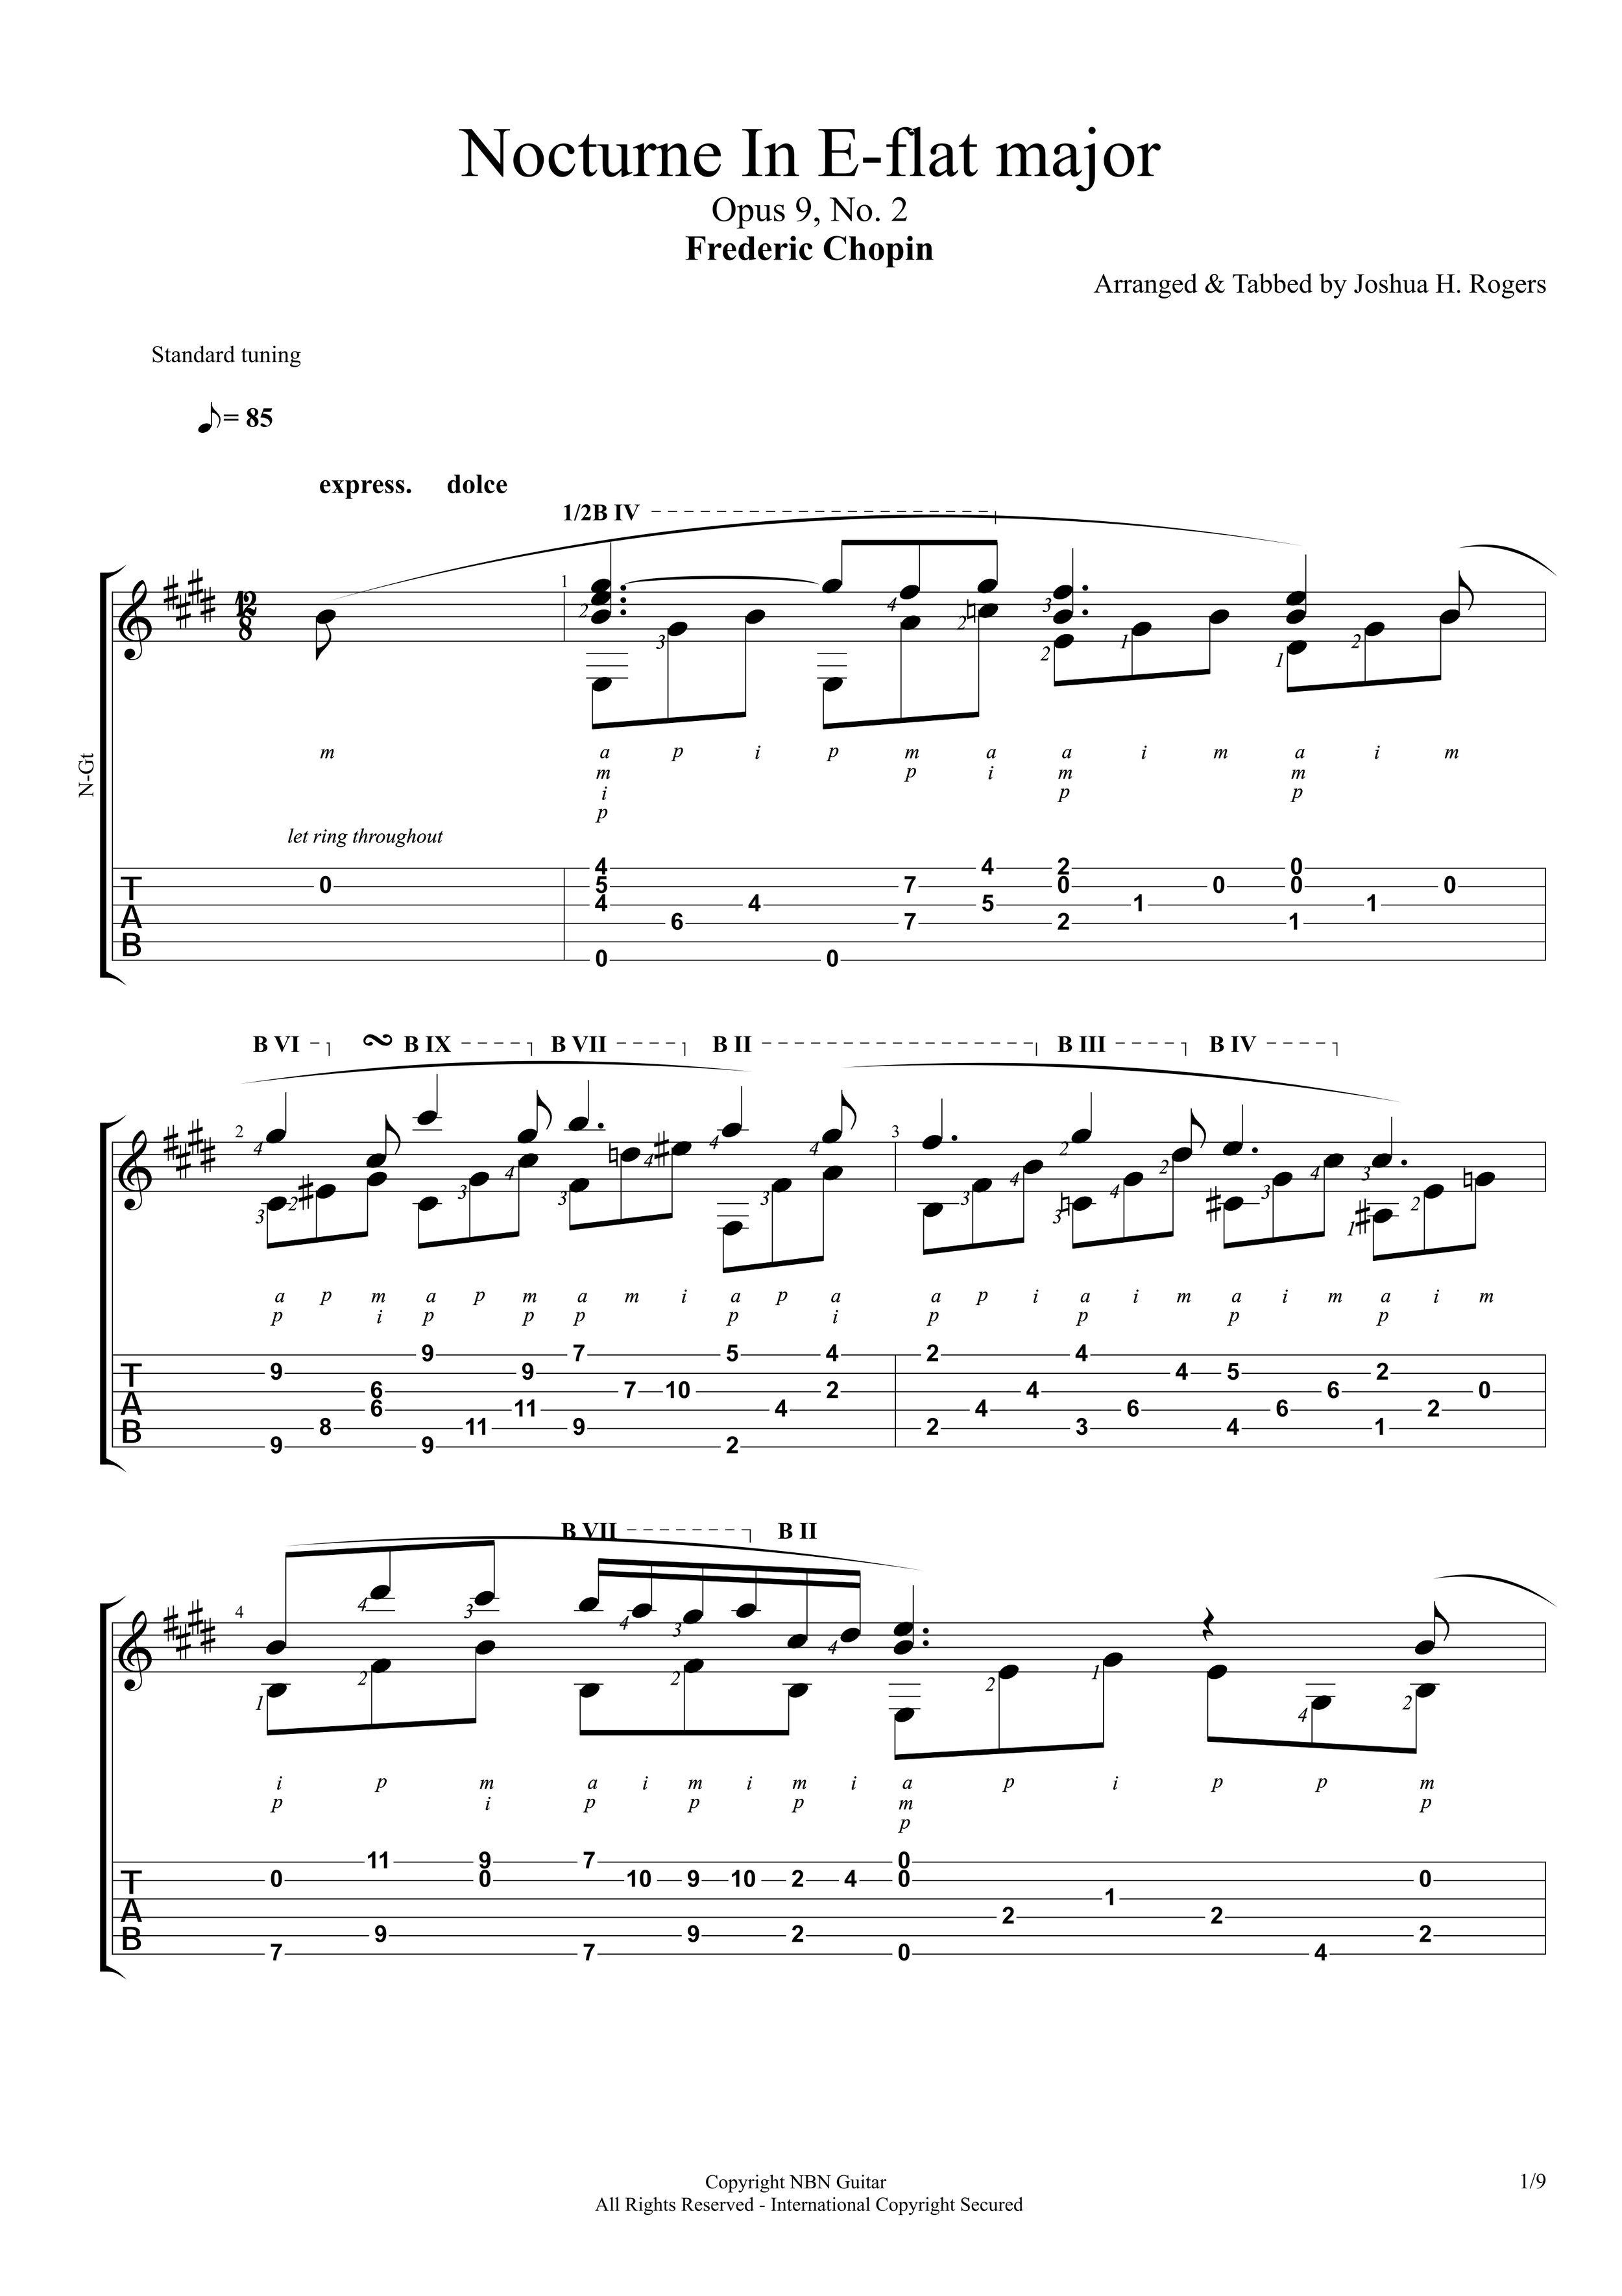 Nocturne in E-flat major (Sheet Music & Tabs)-p03.jpg